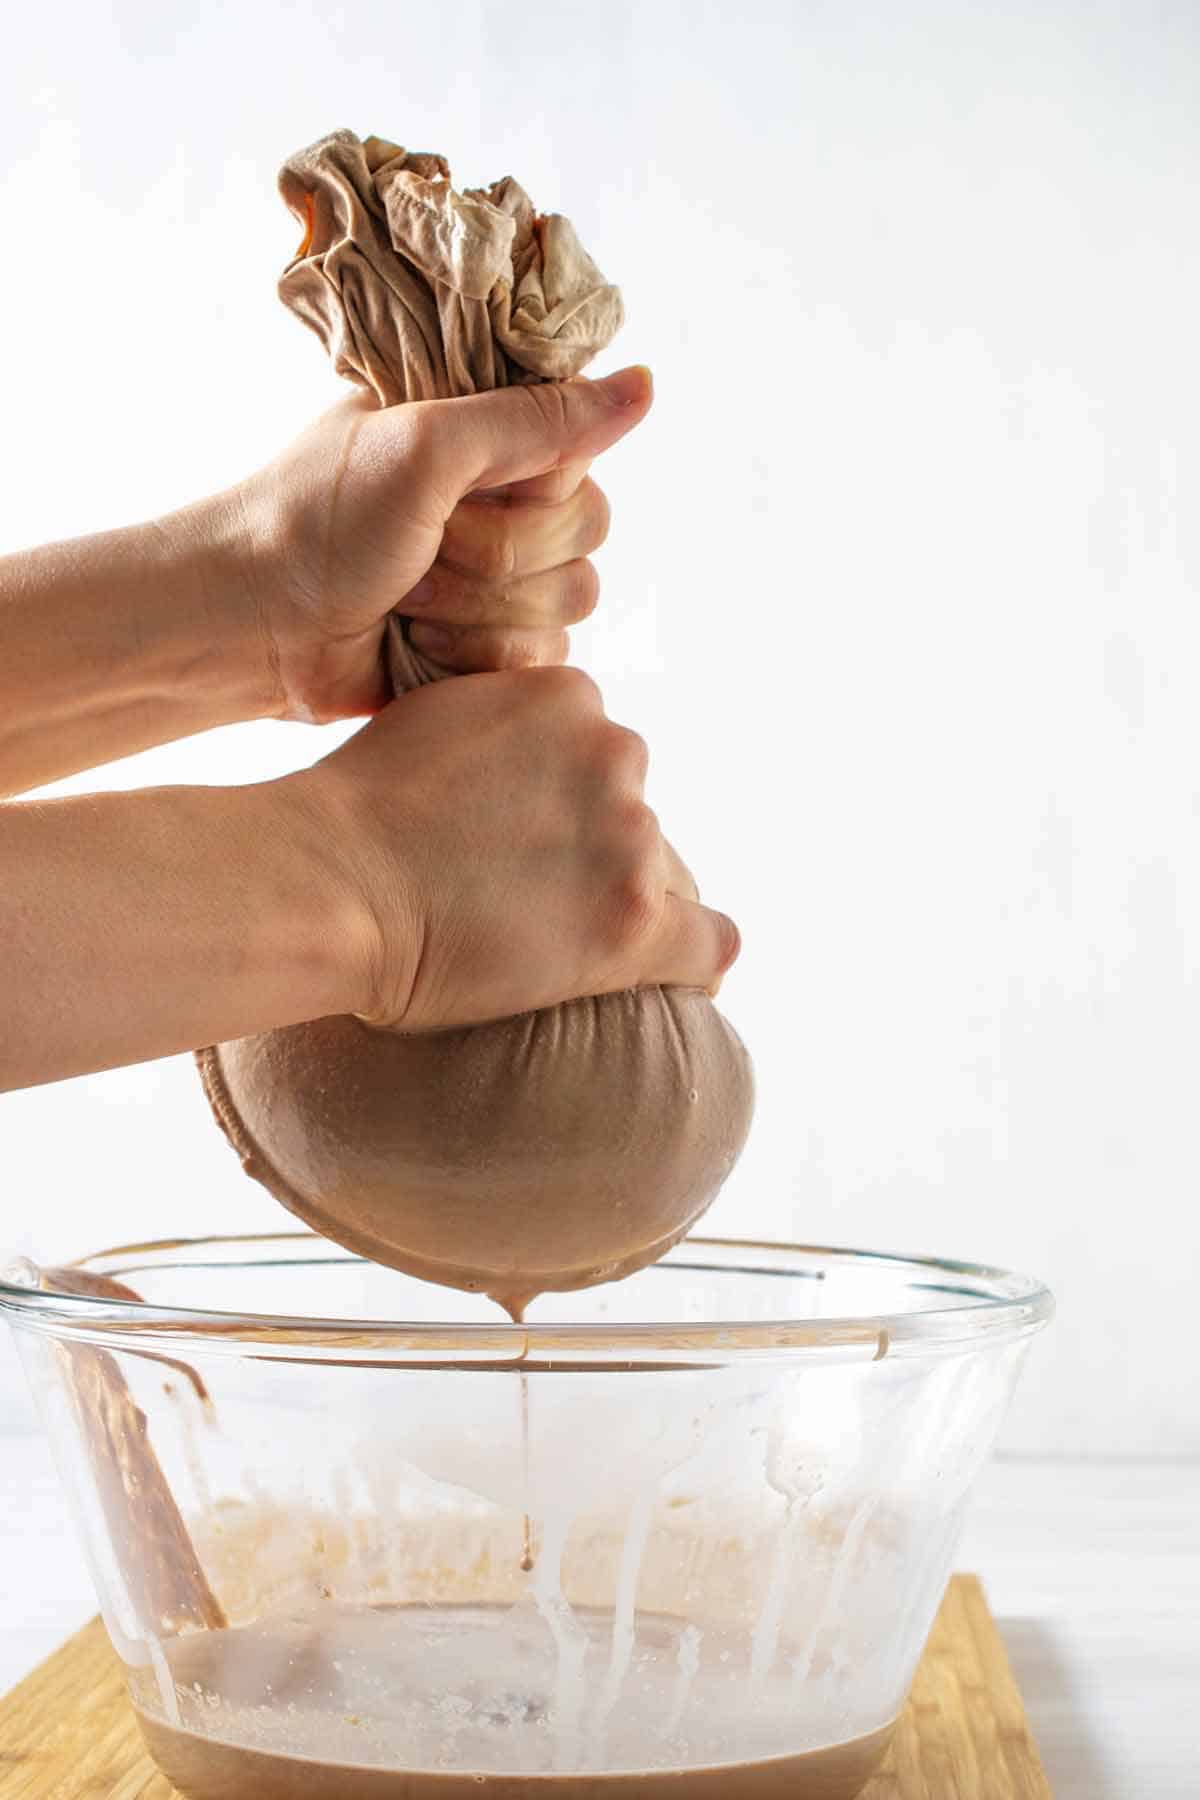 Hands squeezing the almond milk through a nut milk bag.